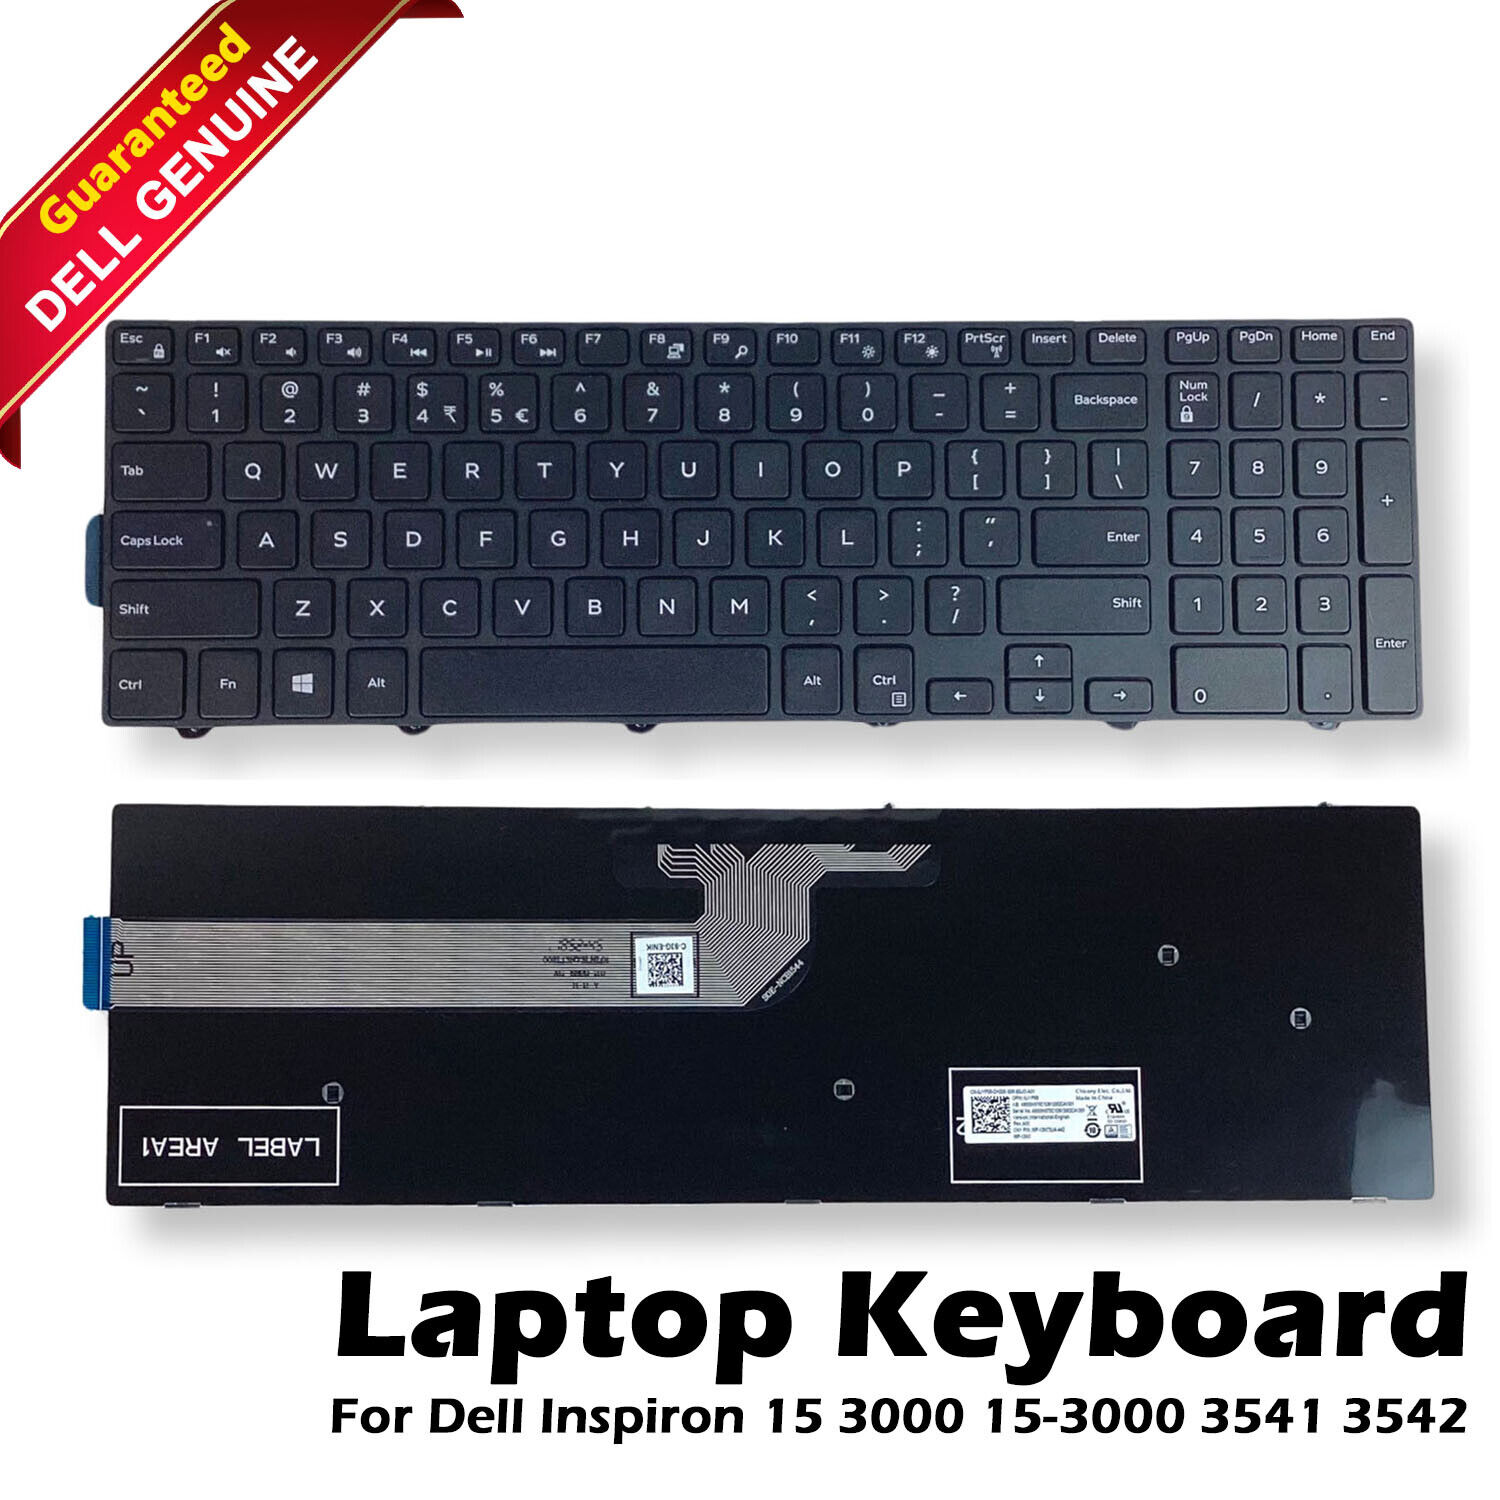 Dell OEM Inspiron 15 3541 3542 3543 Laptop US INTL Keyboard Non-Backlit JYP58